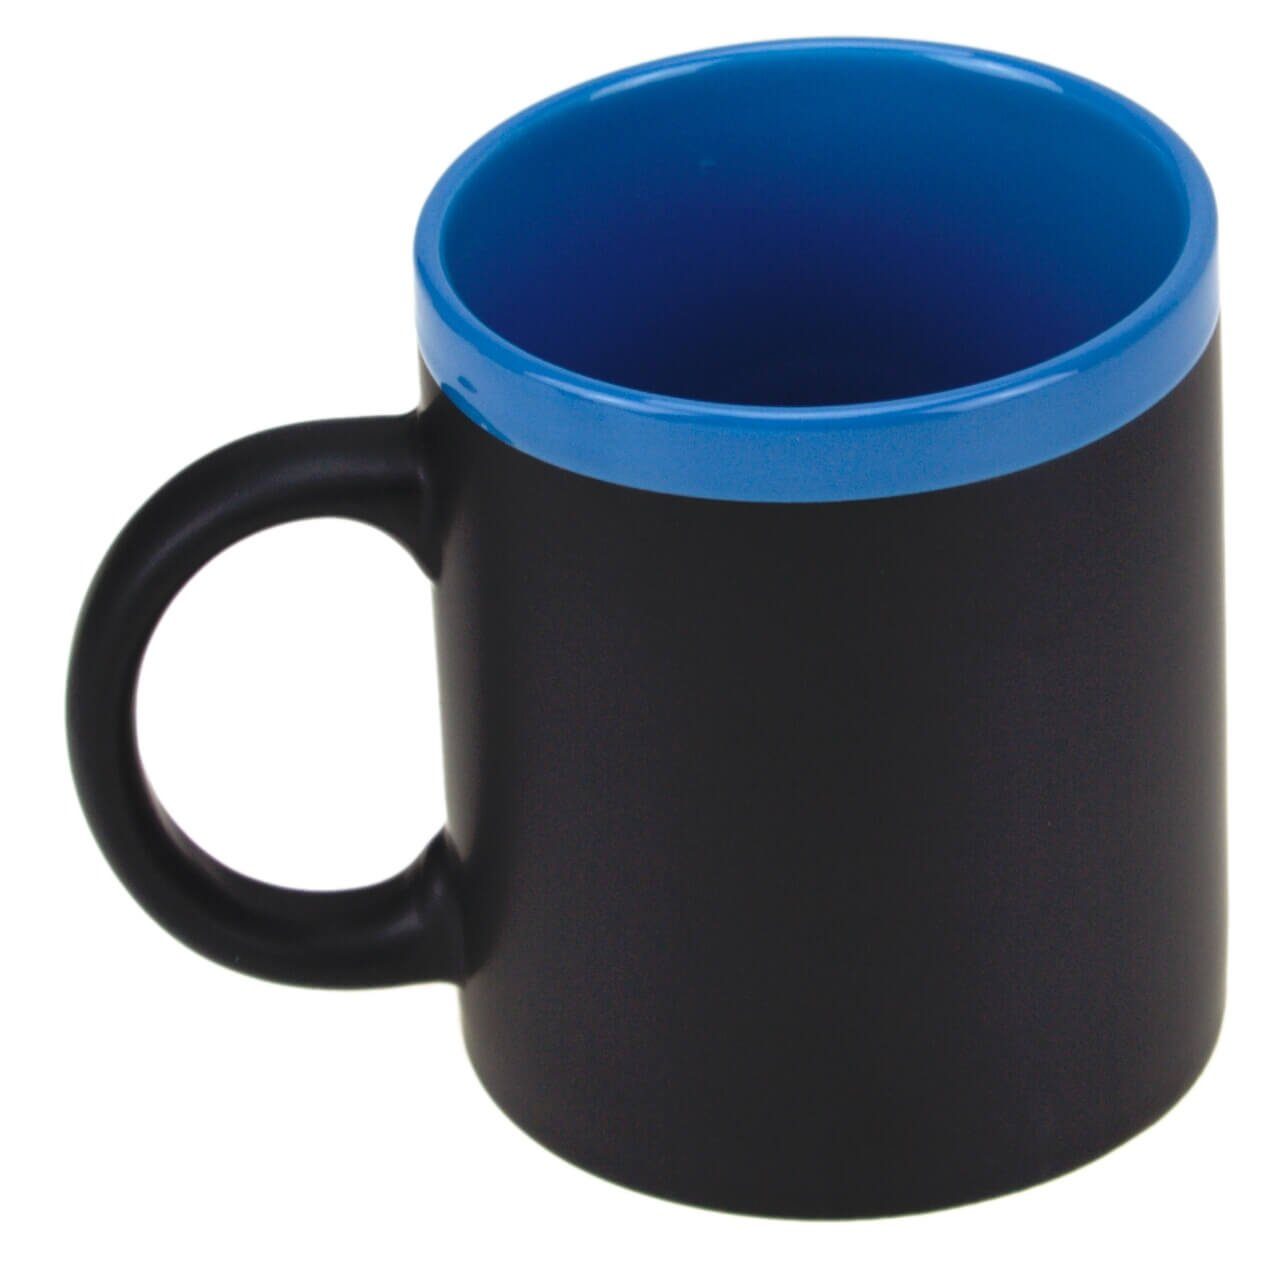 Out of the Blue Tasse Beschreibbare Memo Kaffee Becher Tasse - Farbe: blau